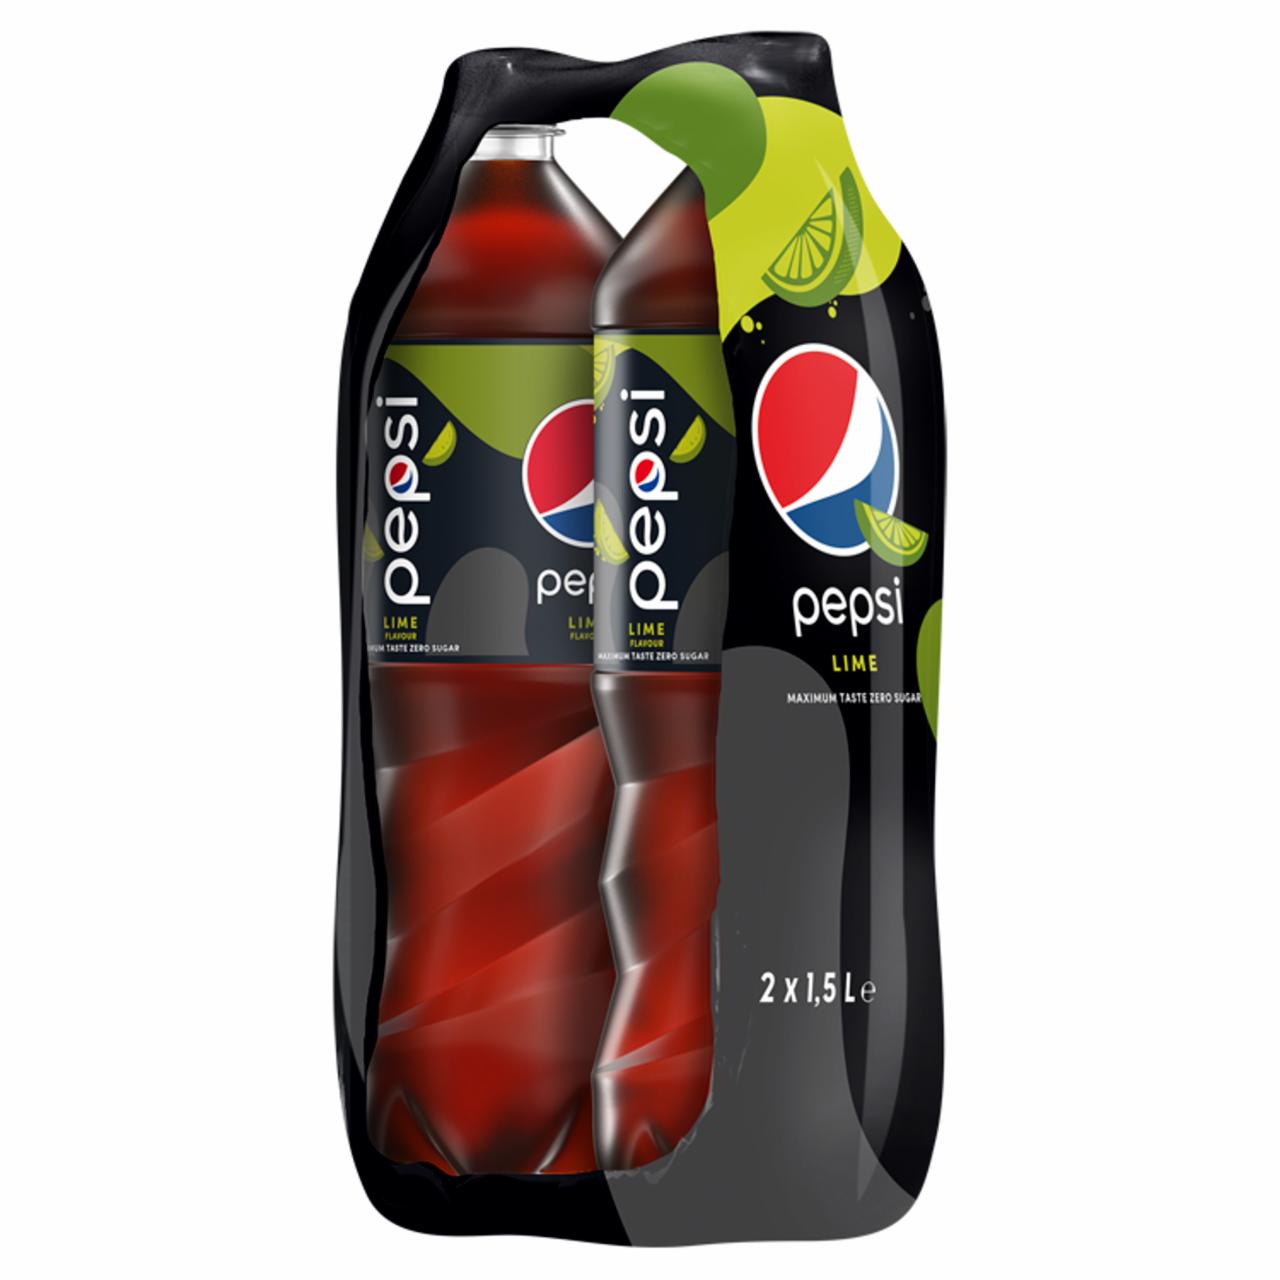 Zdjęcia - Pepsi Lime Napój gazowany 3 l (2 x 1,5 l)